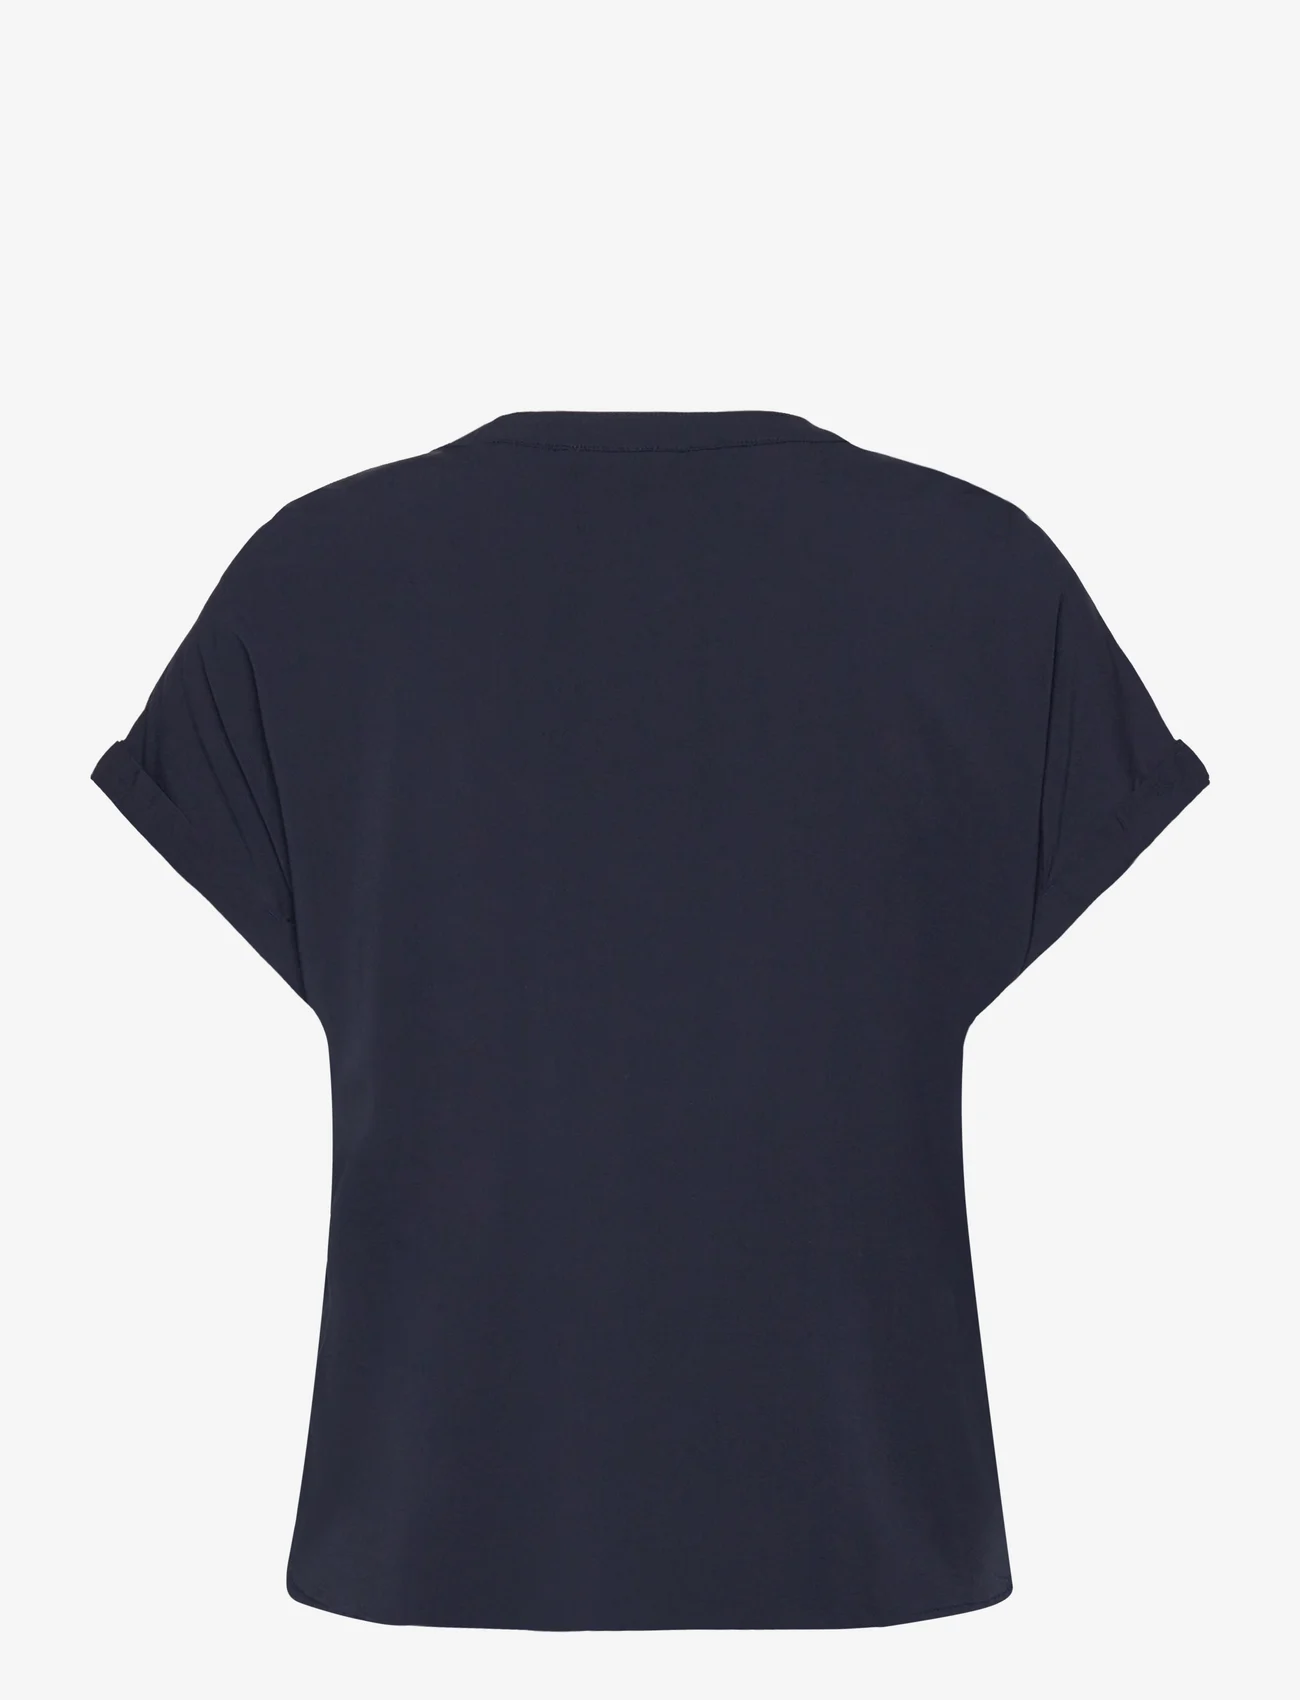 Tom Tailor - solid blouse - marškinėliai - sky captain blue - 1